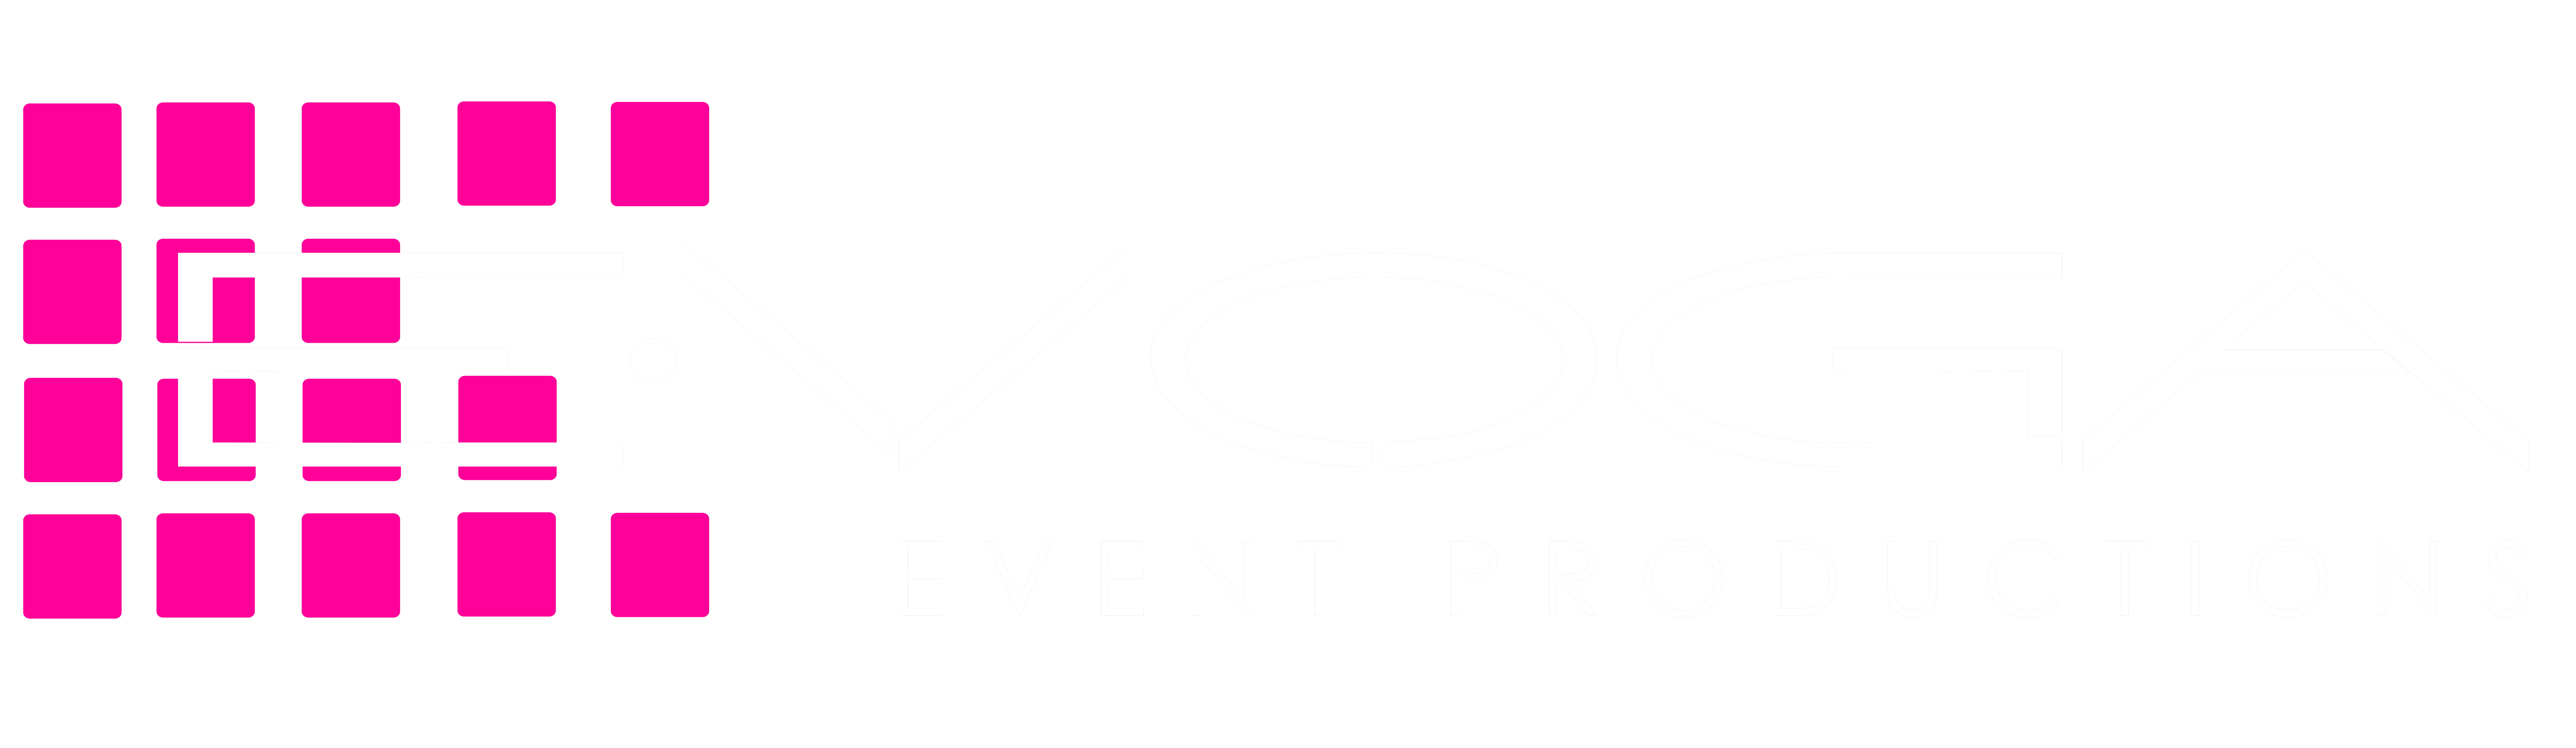 Evoga Event Management